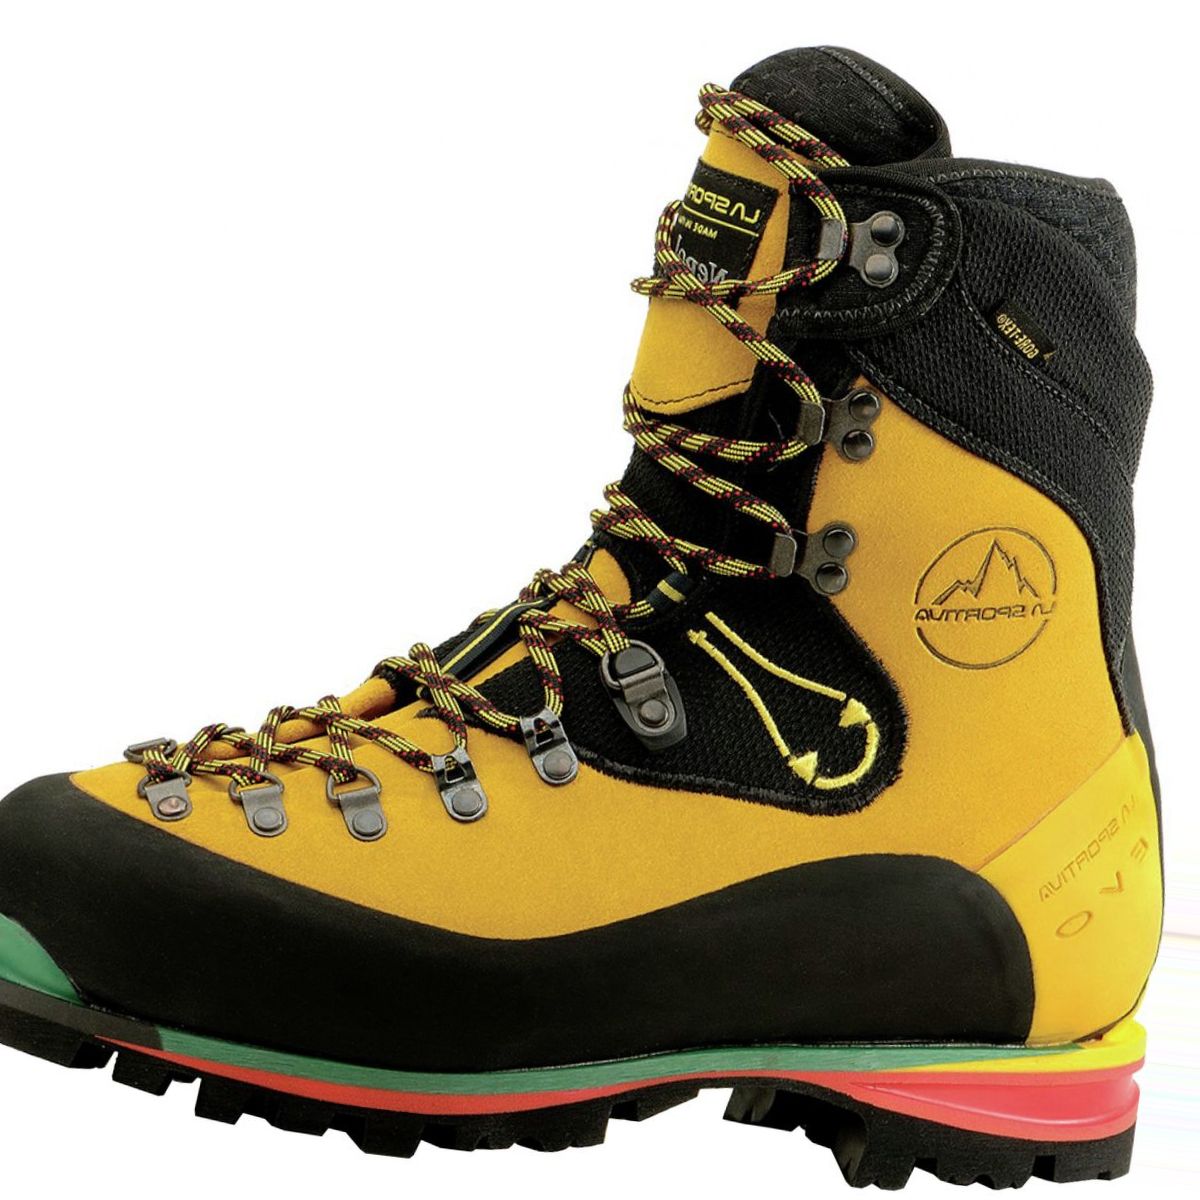 La Sportiva Nepal EVO GTX Mountaineering Boot - Men's